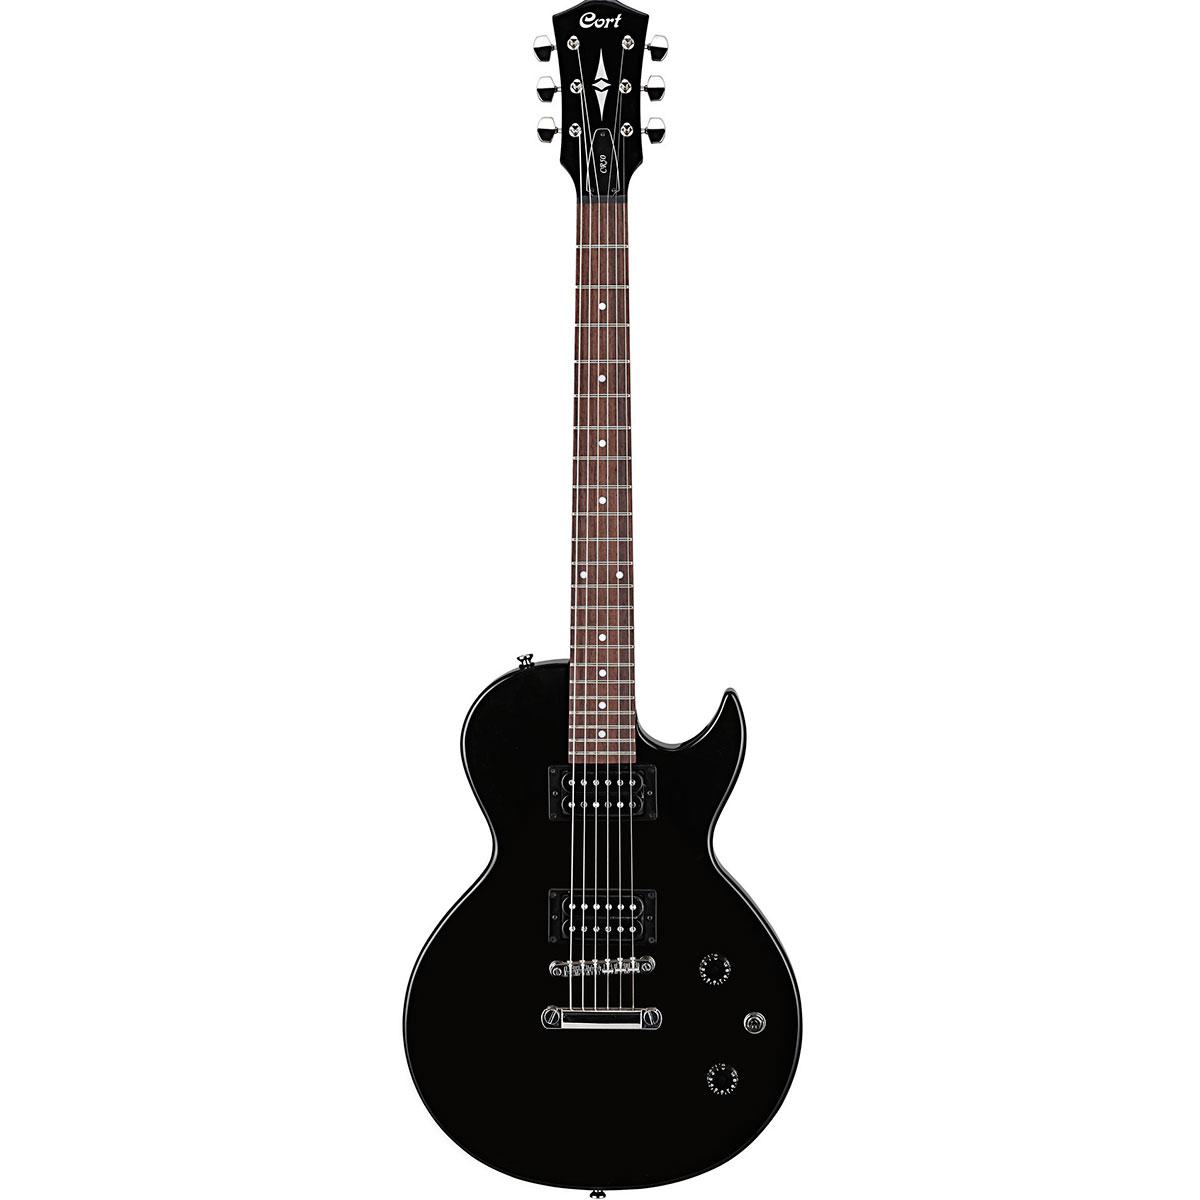 Cort - Guitarra Eléctrica CR, Color: Negra Mod.CR50 BK_73